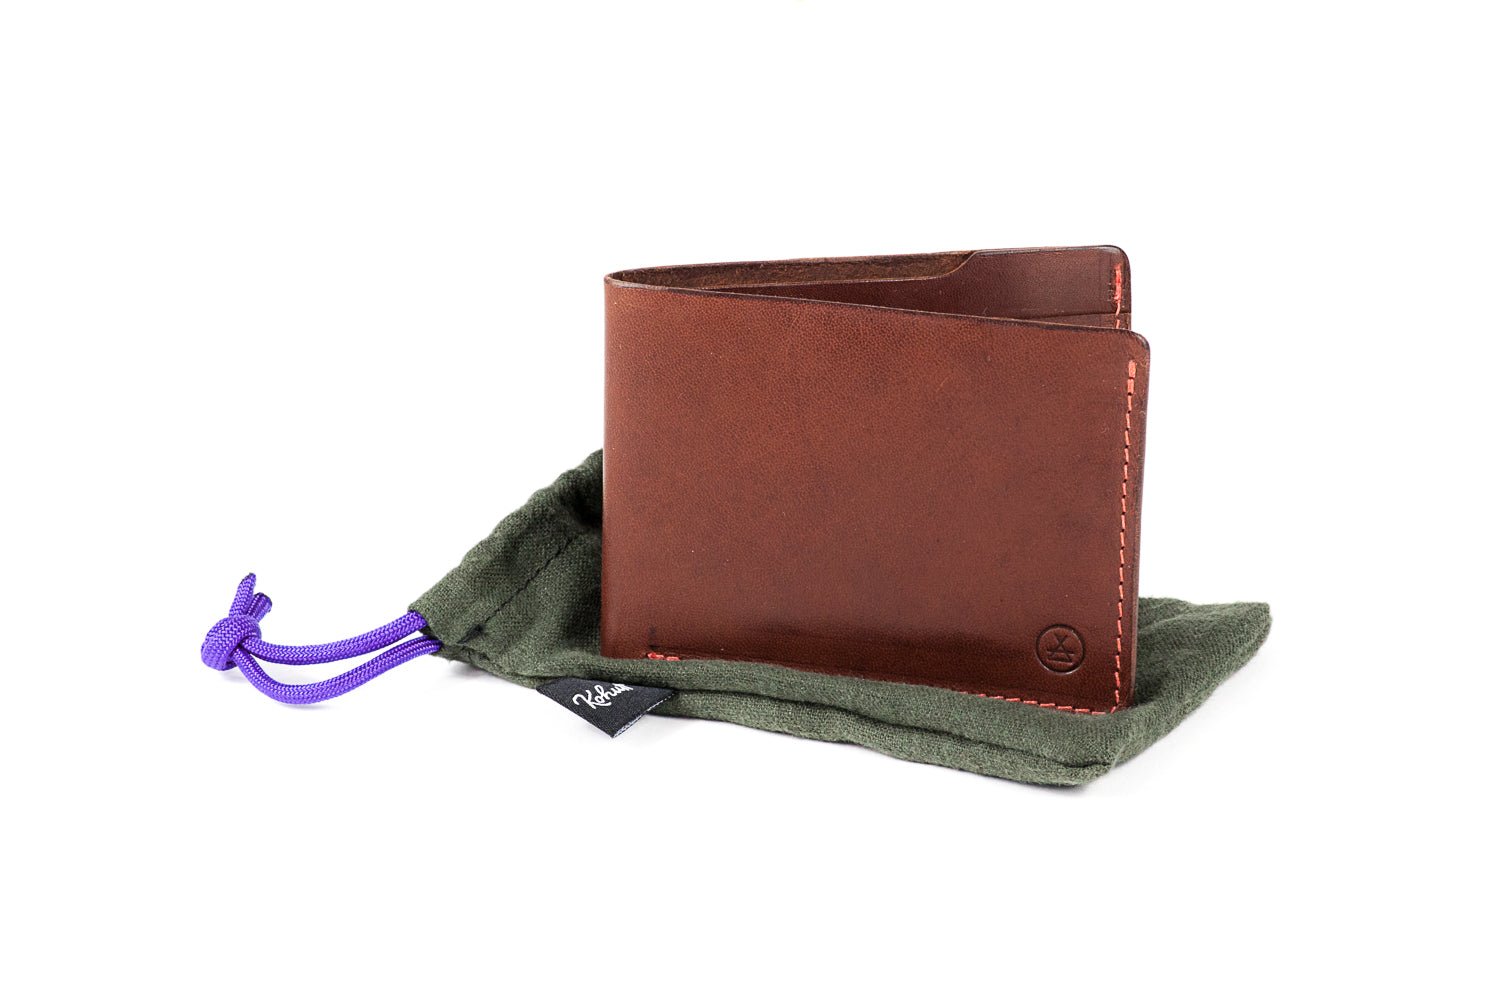 Pre-cut Kangaroo leather DIY horizontal bifold slim wallet - Kohutt™ - made in Tasmania